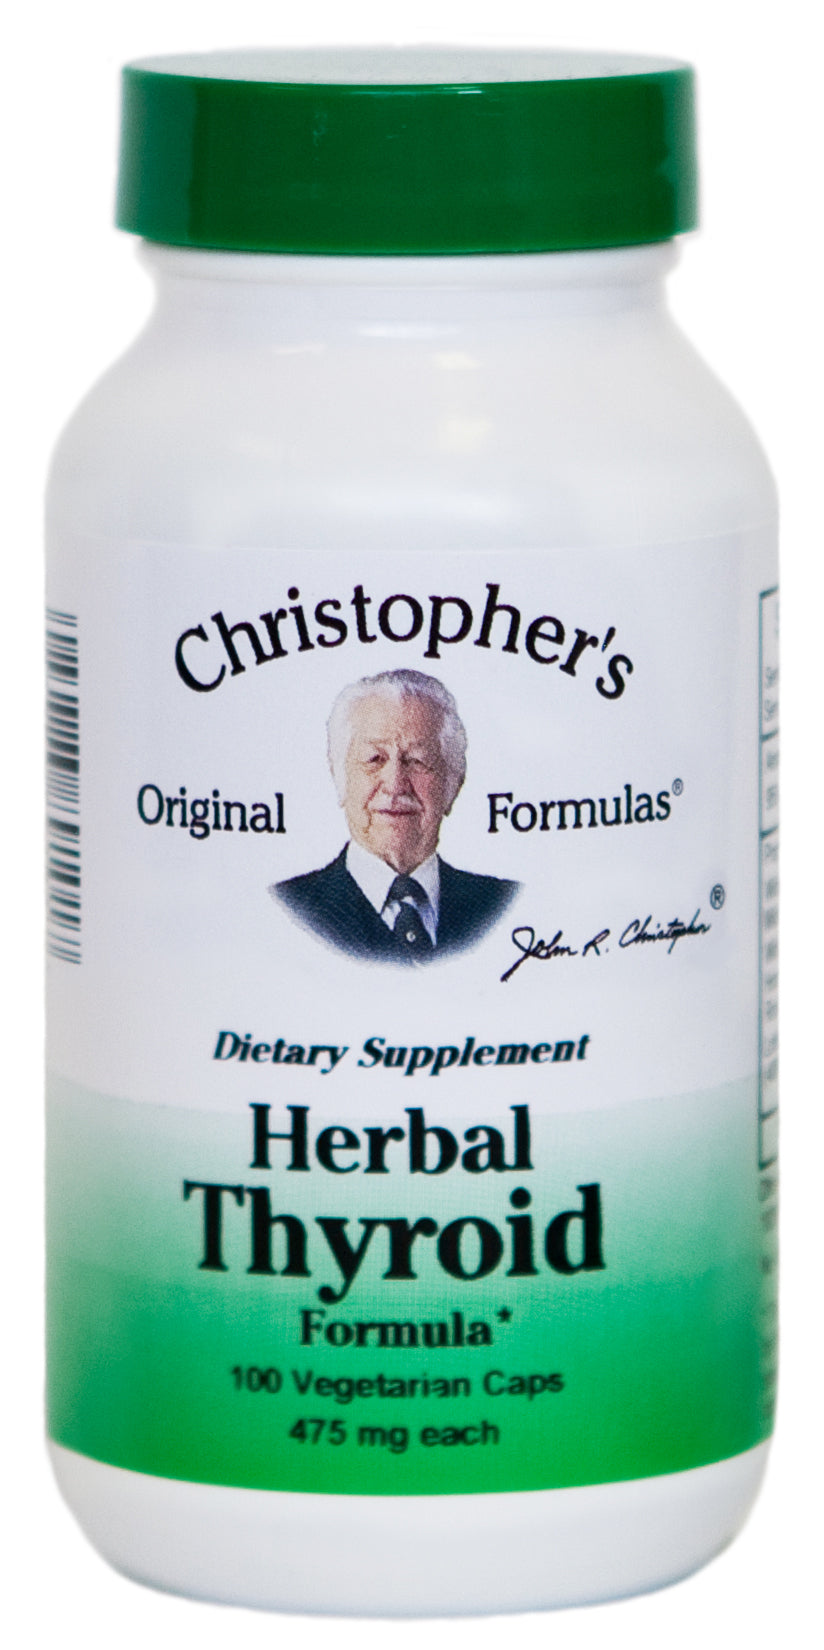 Dr. Christopher's Herbal Thyroid Formula